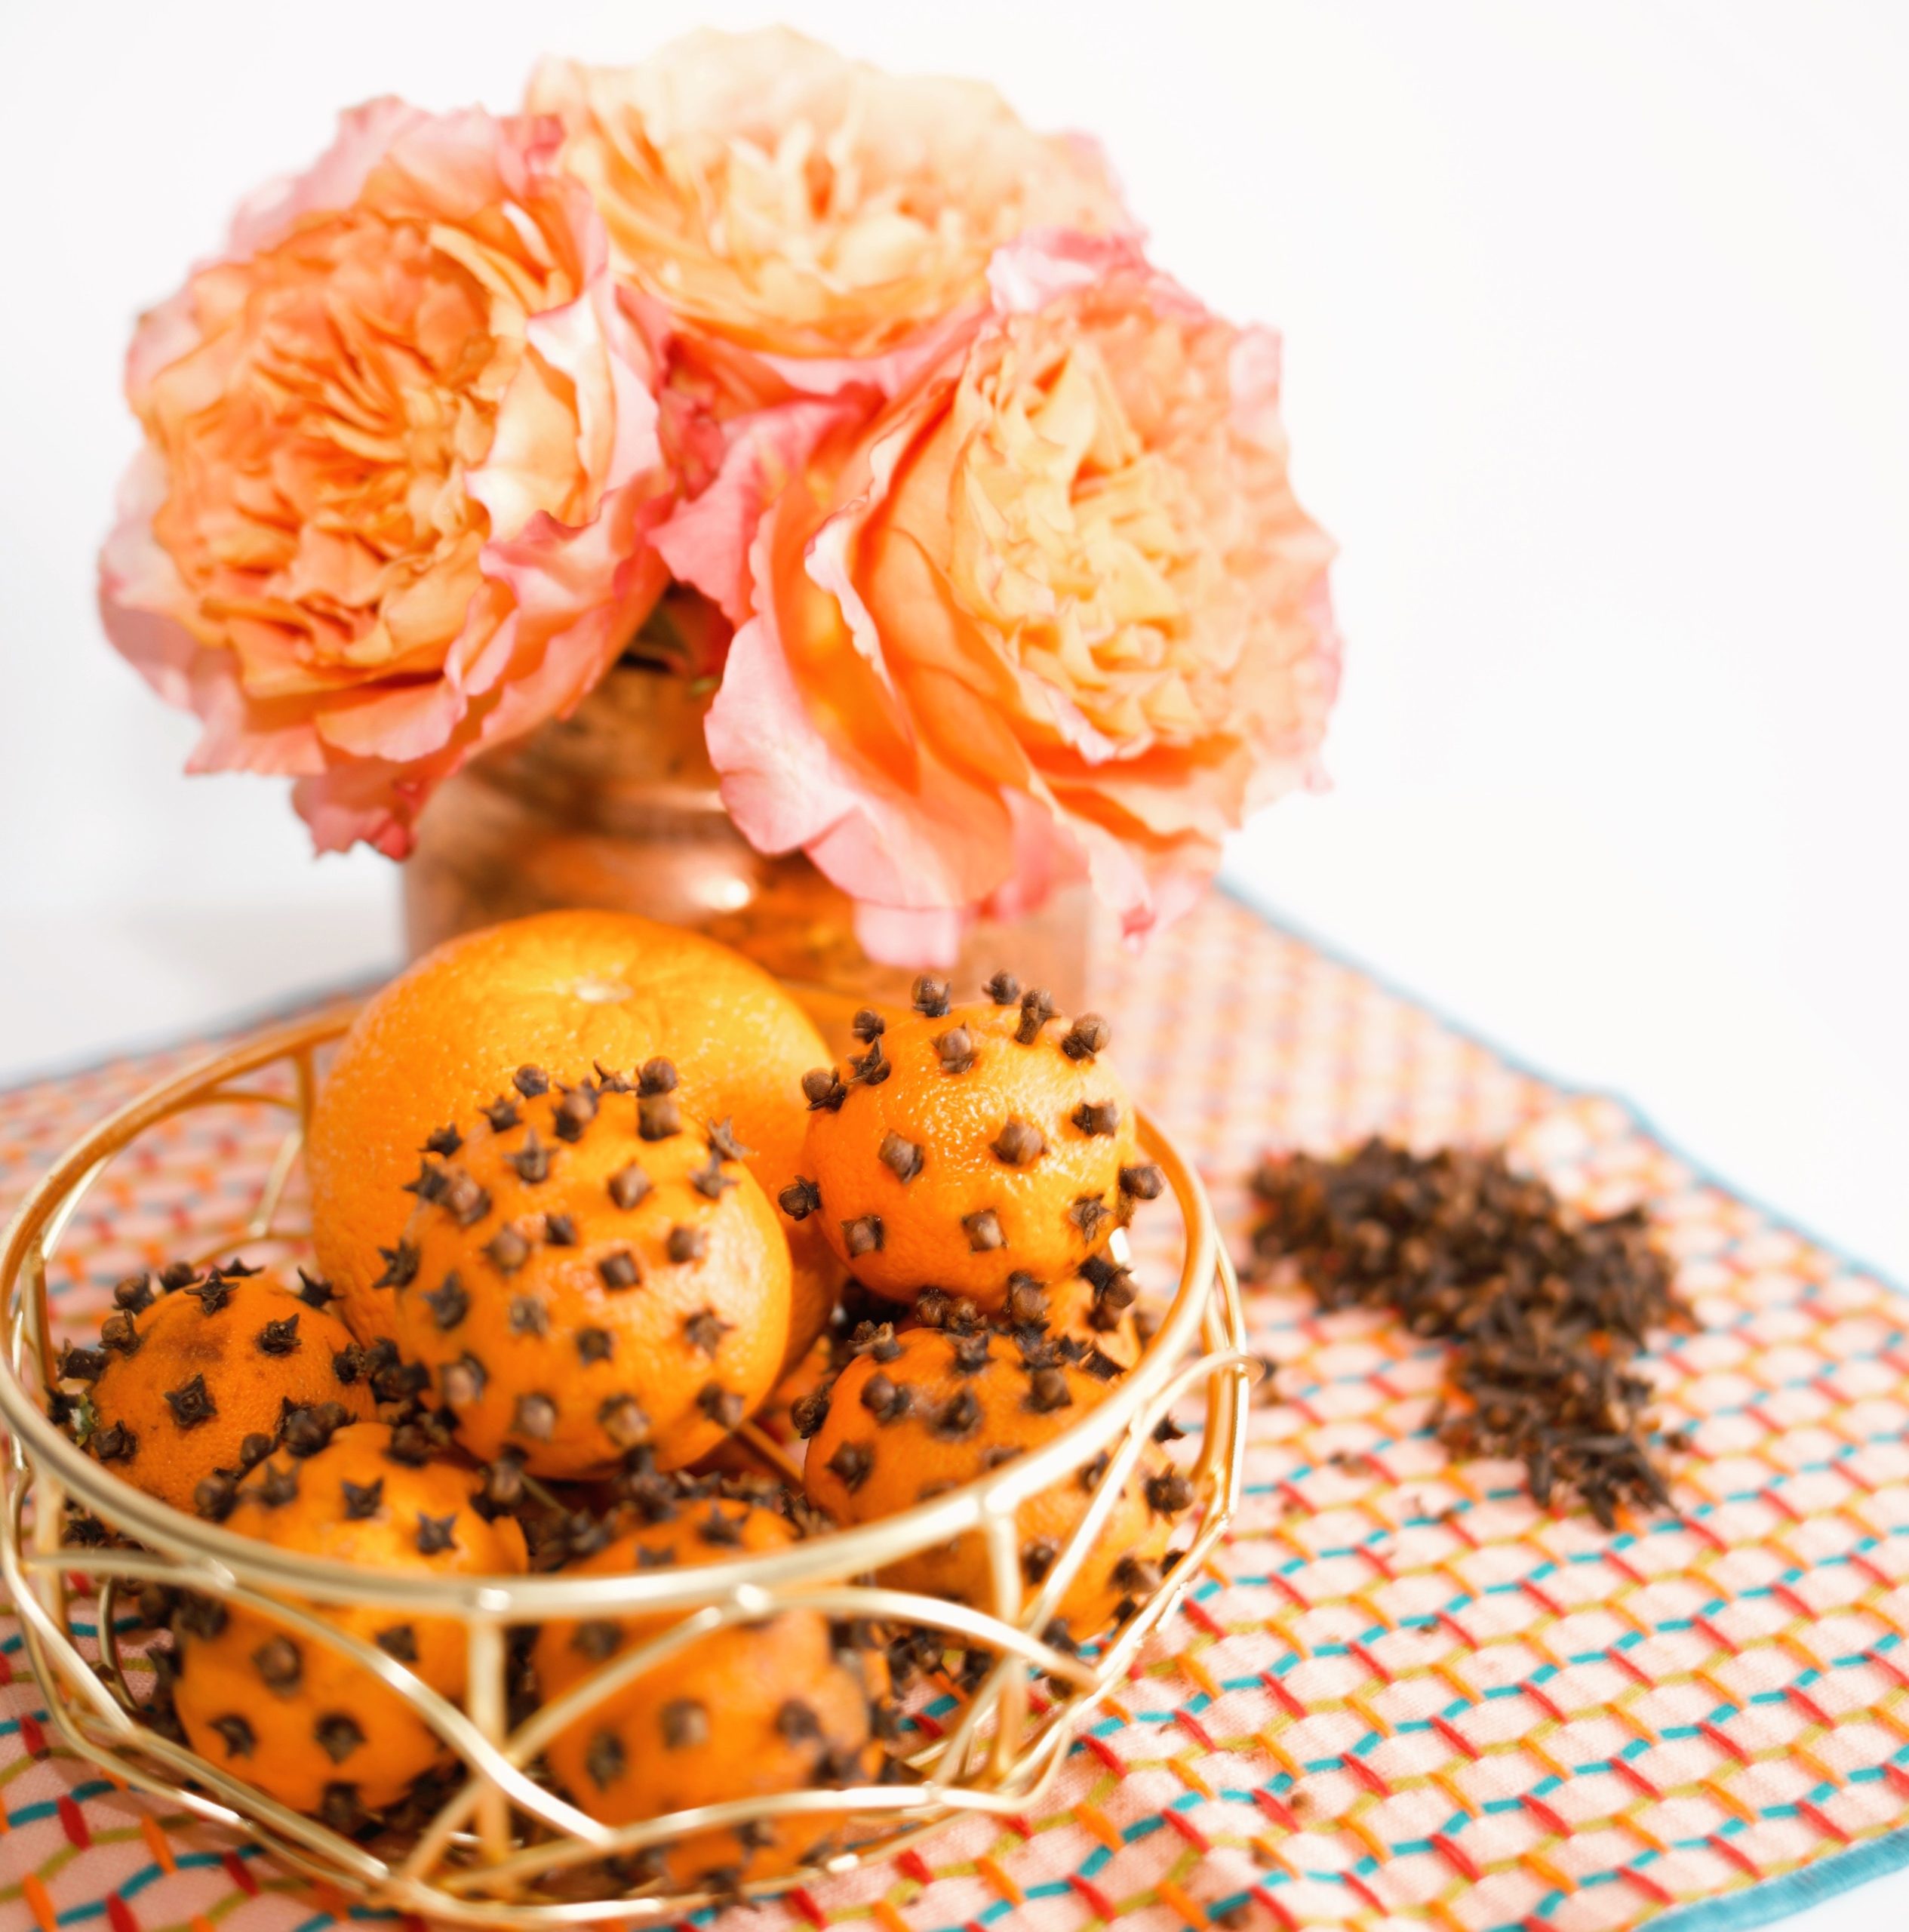 Clove & Orange Pomander Balls “A Natural Air Freshener That Is Pretty Too”